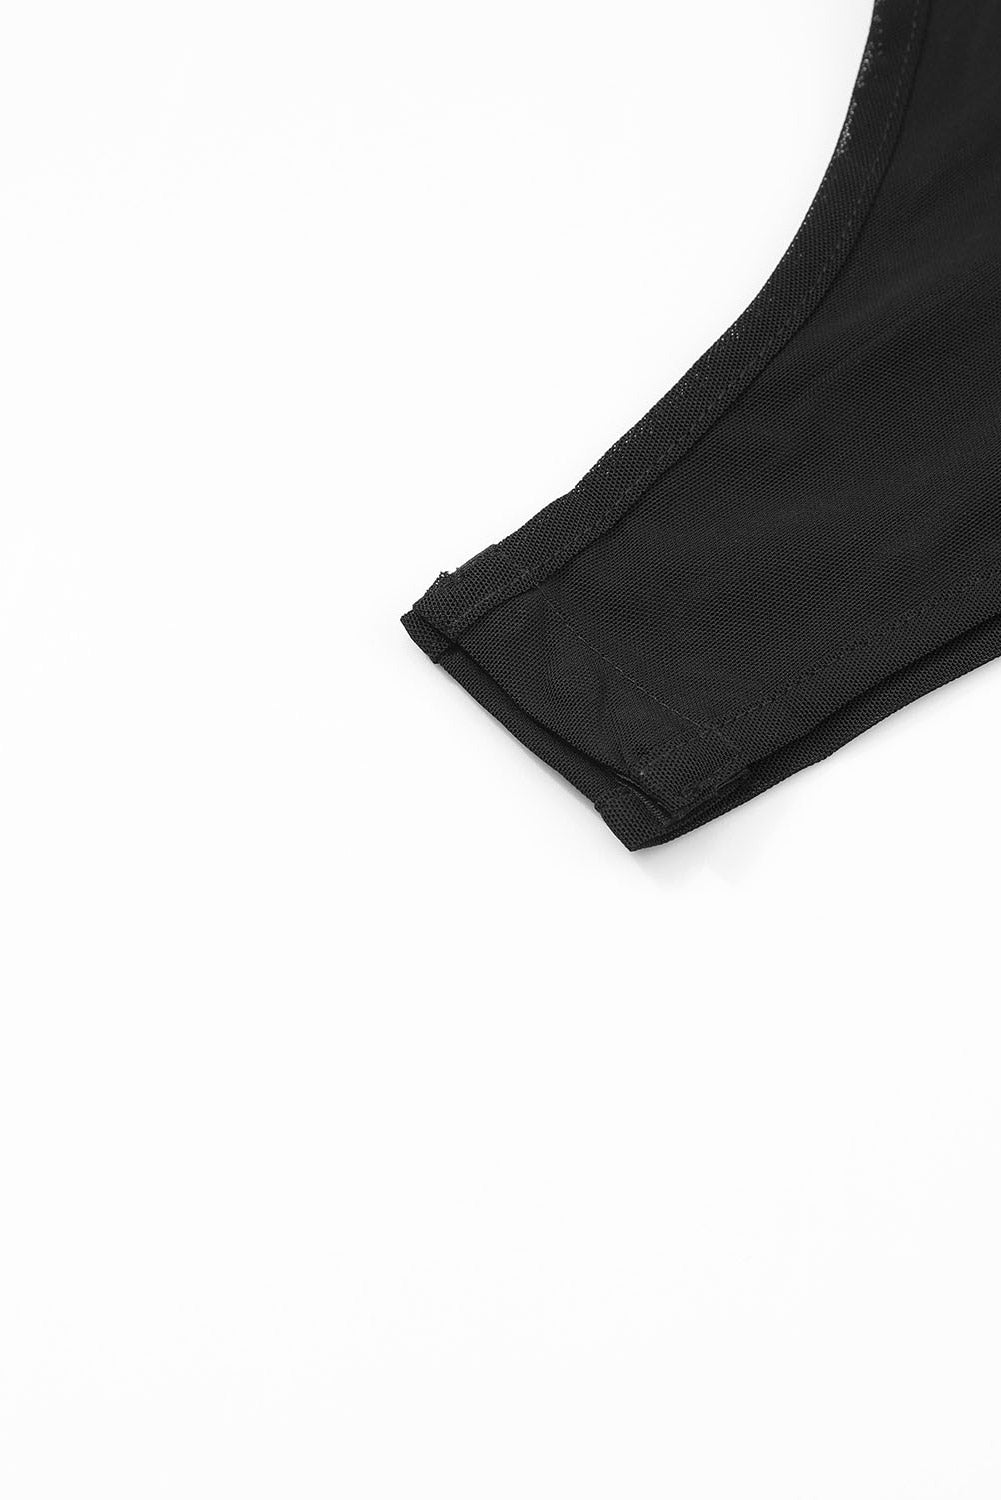 Black Rhinestone Embellished Mesh Long Sleeve Bodysuit LC6421555-2